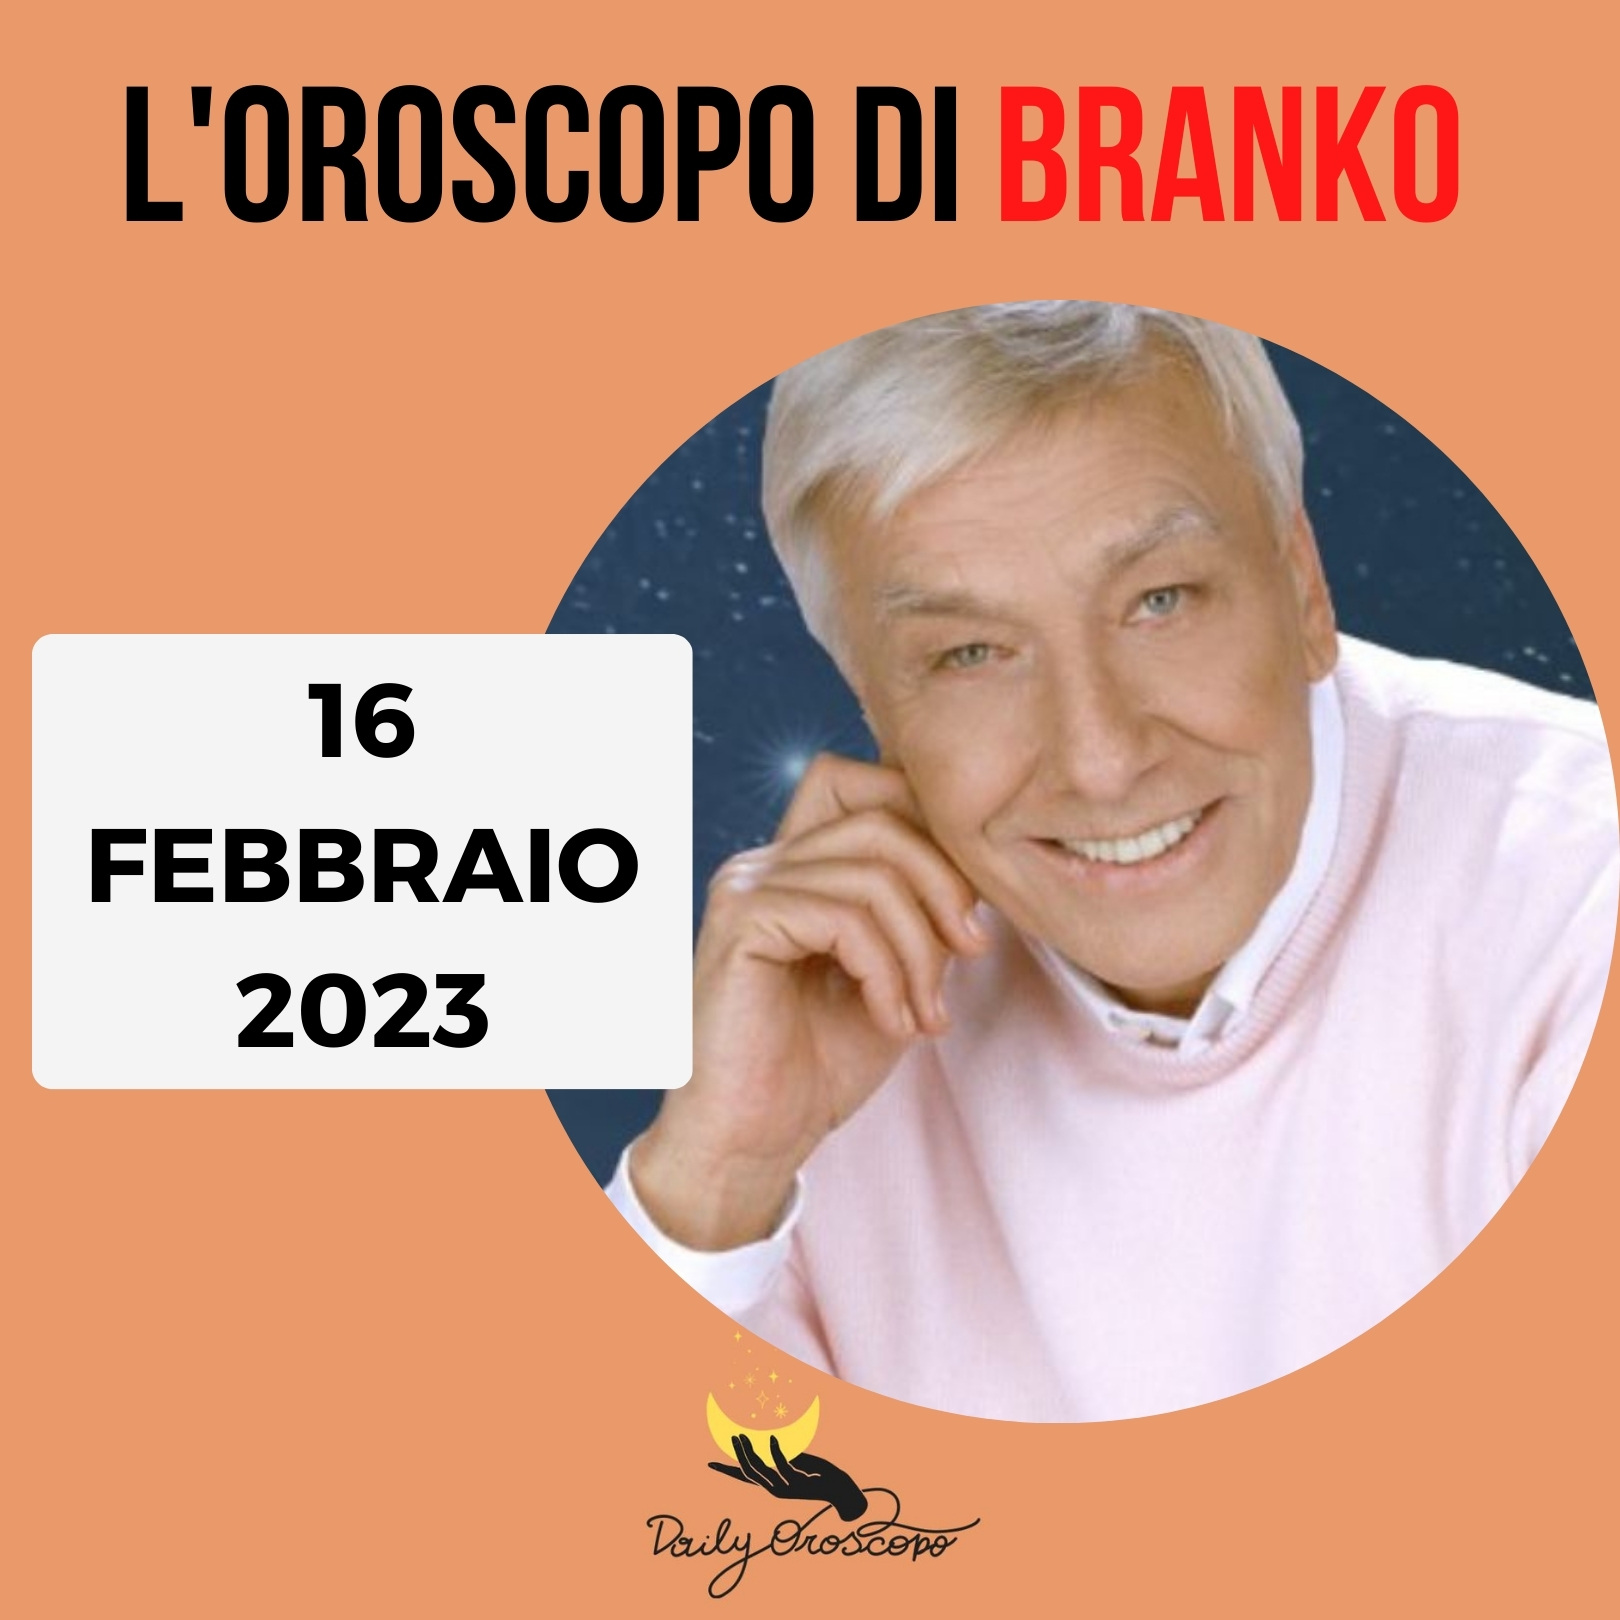 Oroscopo Branko oggi 16 febbraio 2023